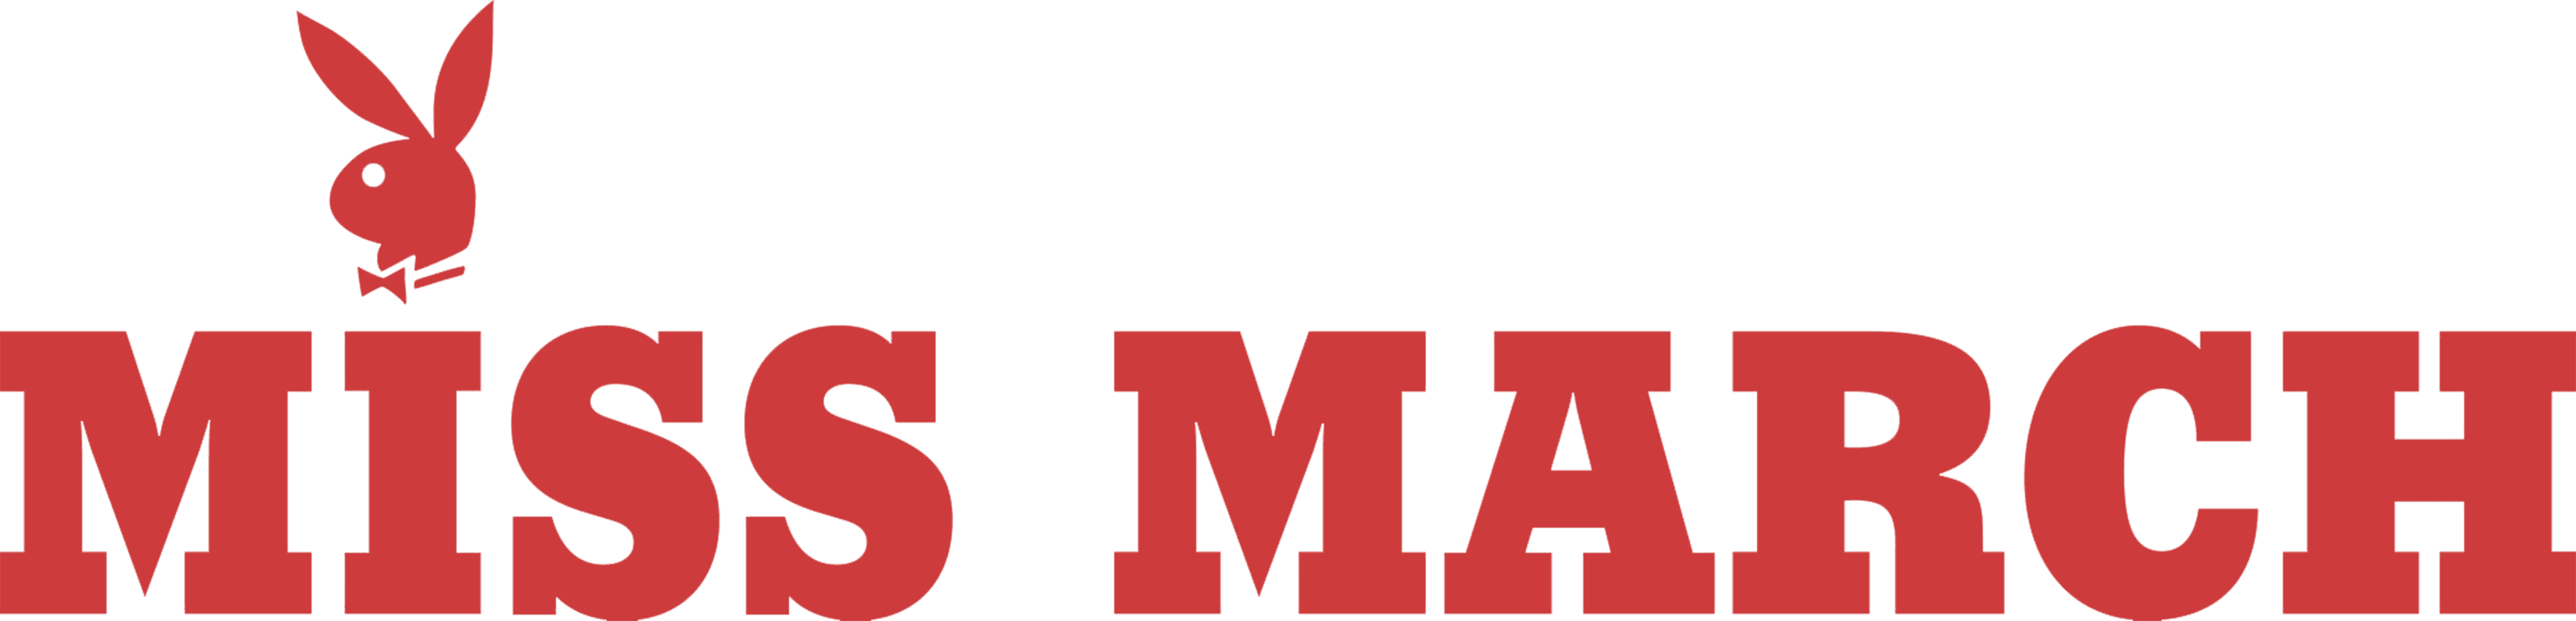 Miss March logo